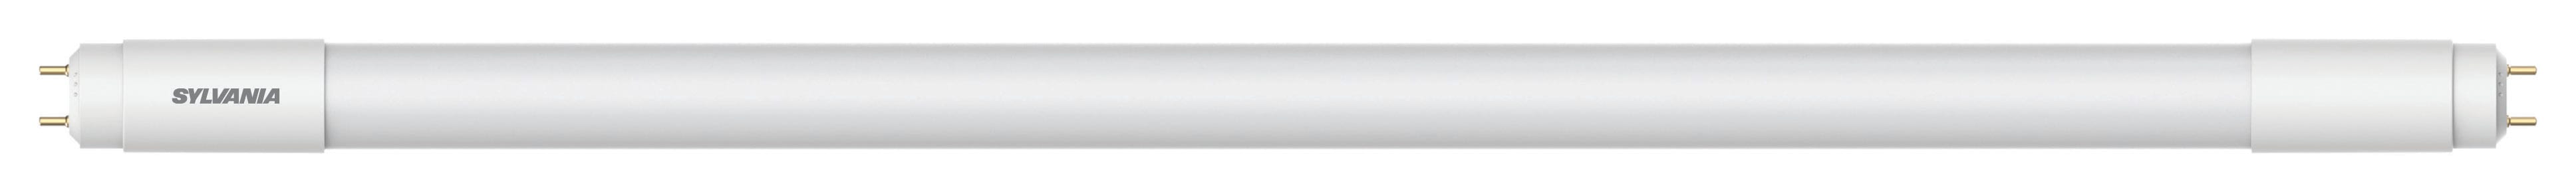 Sylvania 5ft T8 Cool White LED Universal Tube